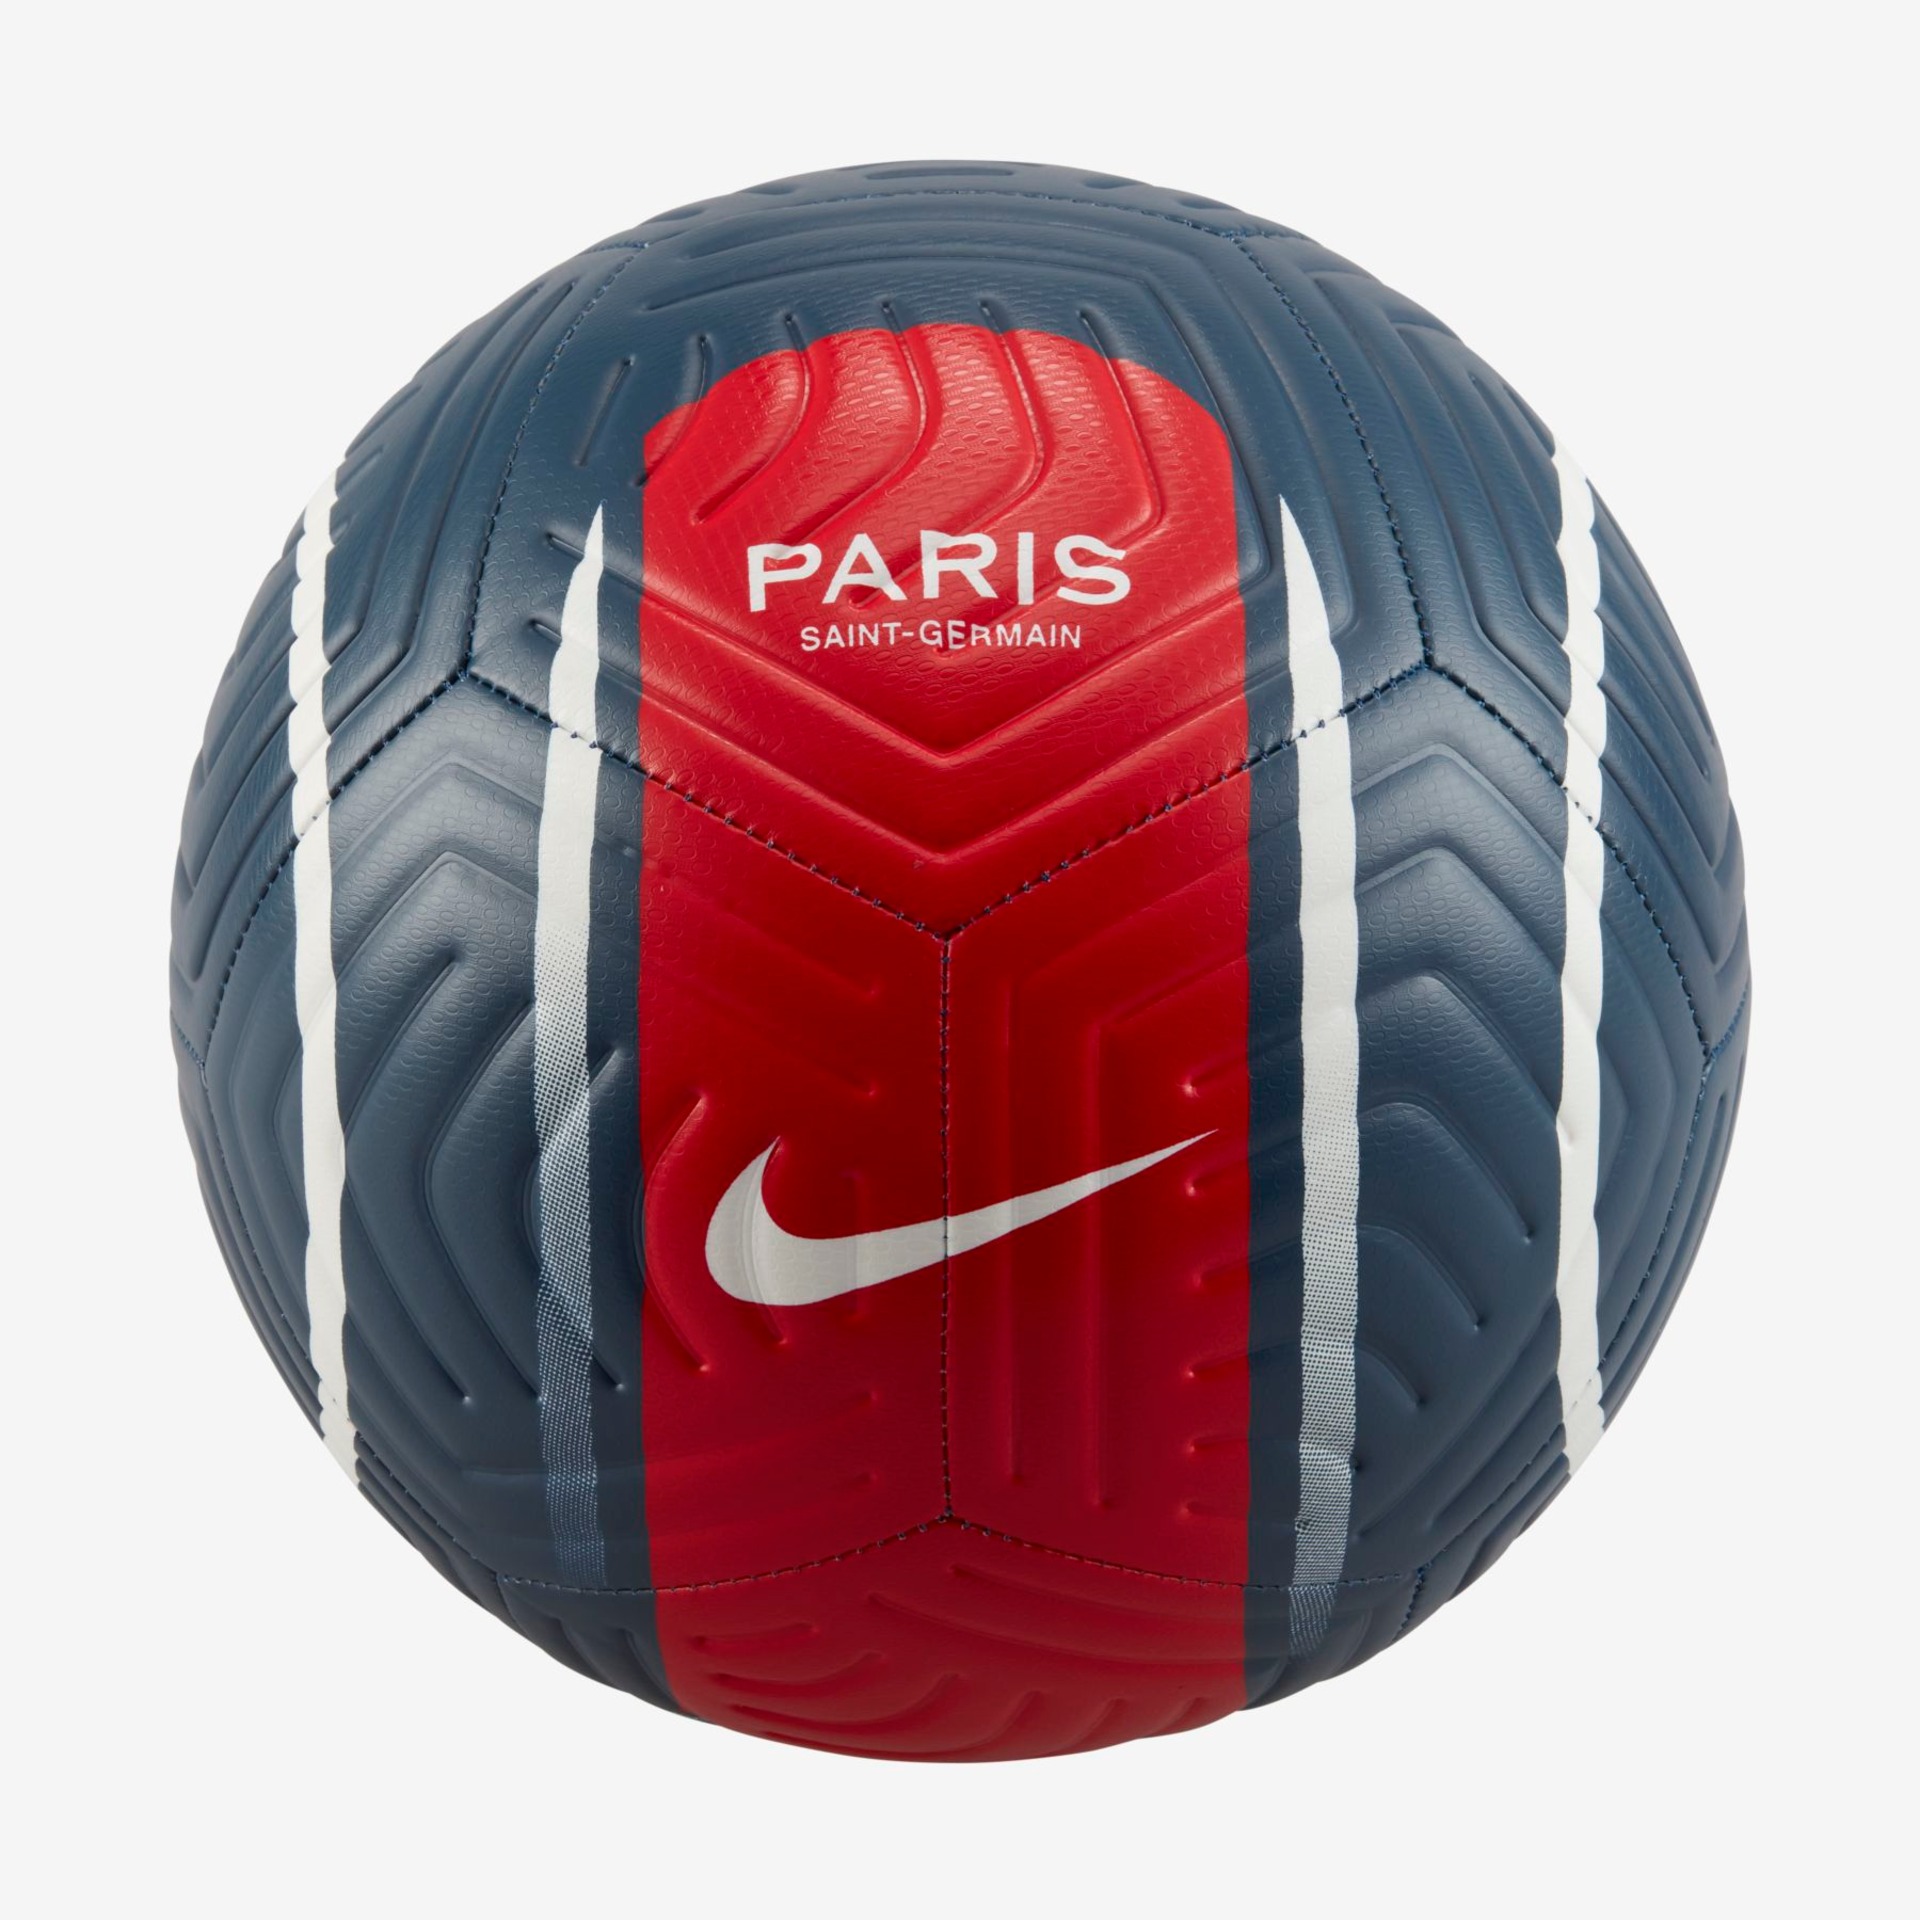 Bola Nike PSG Strike - Foto 2